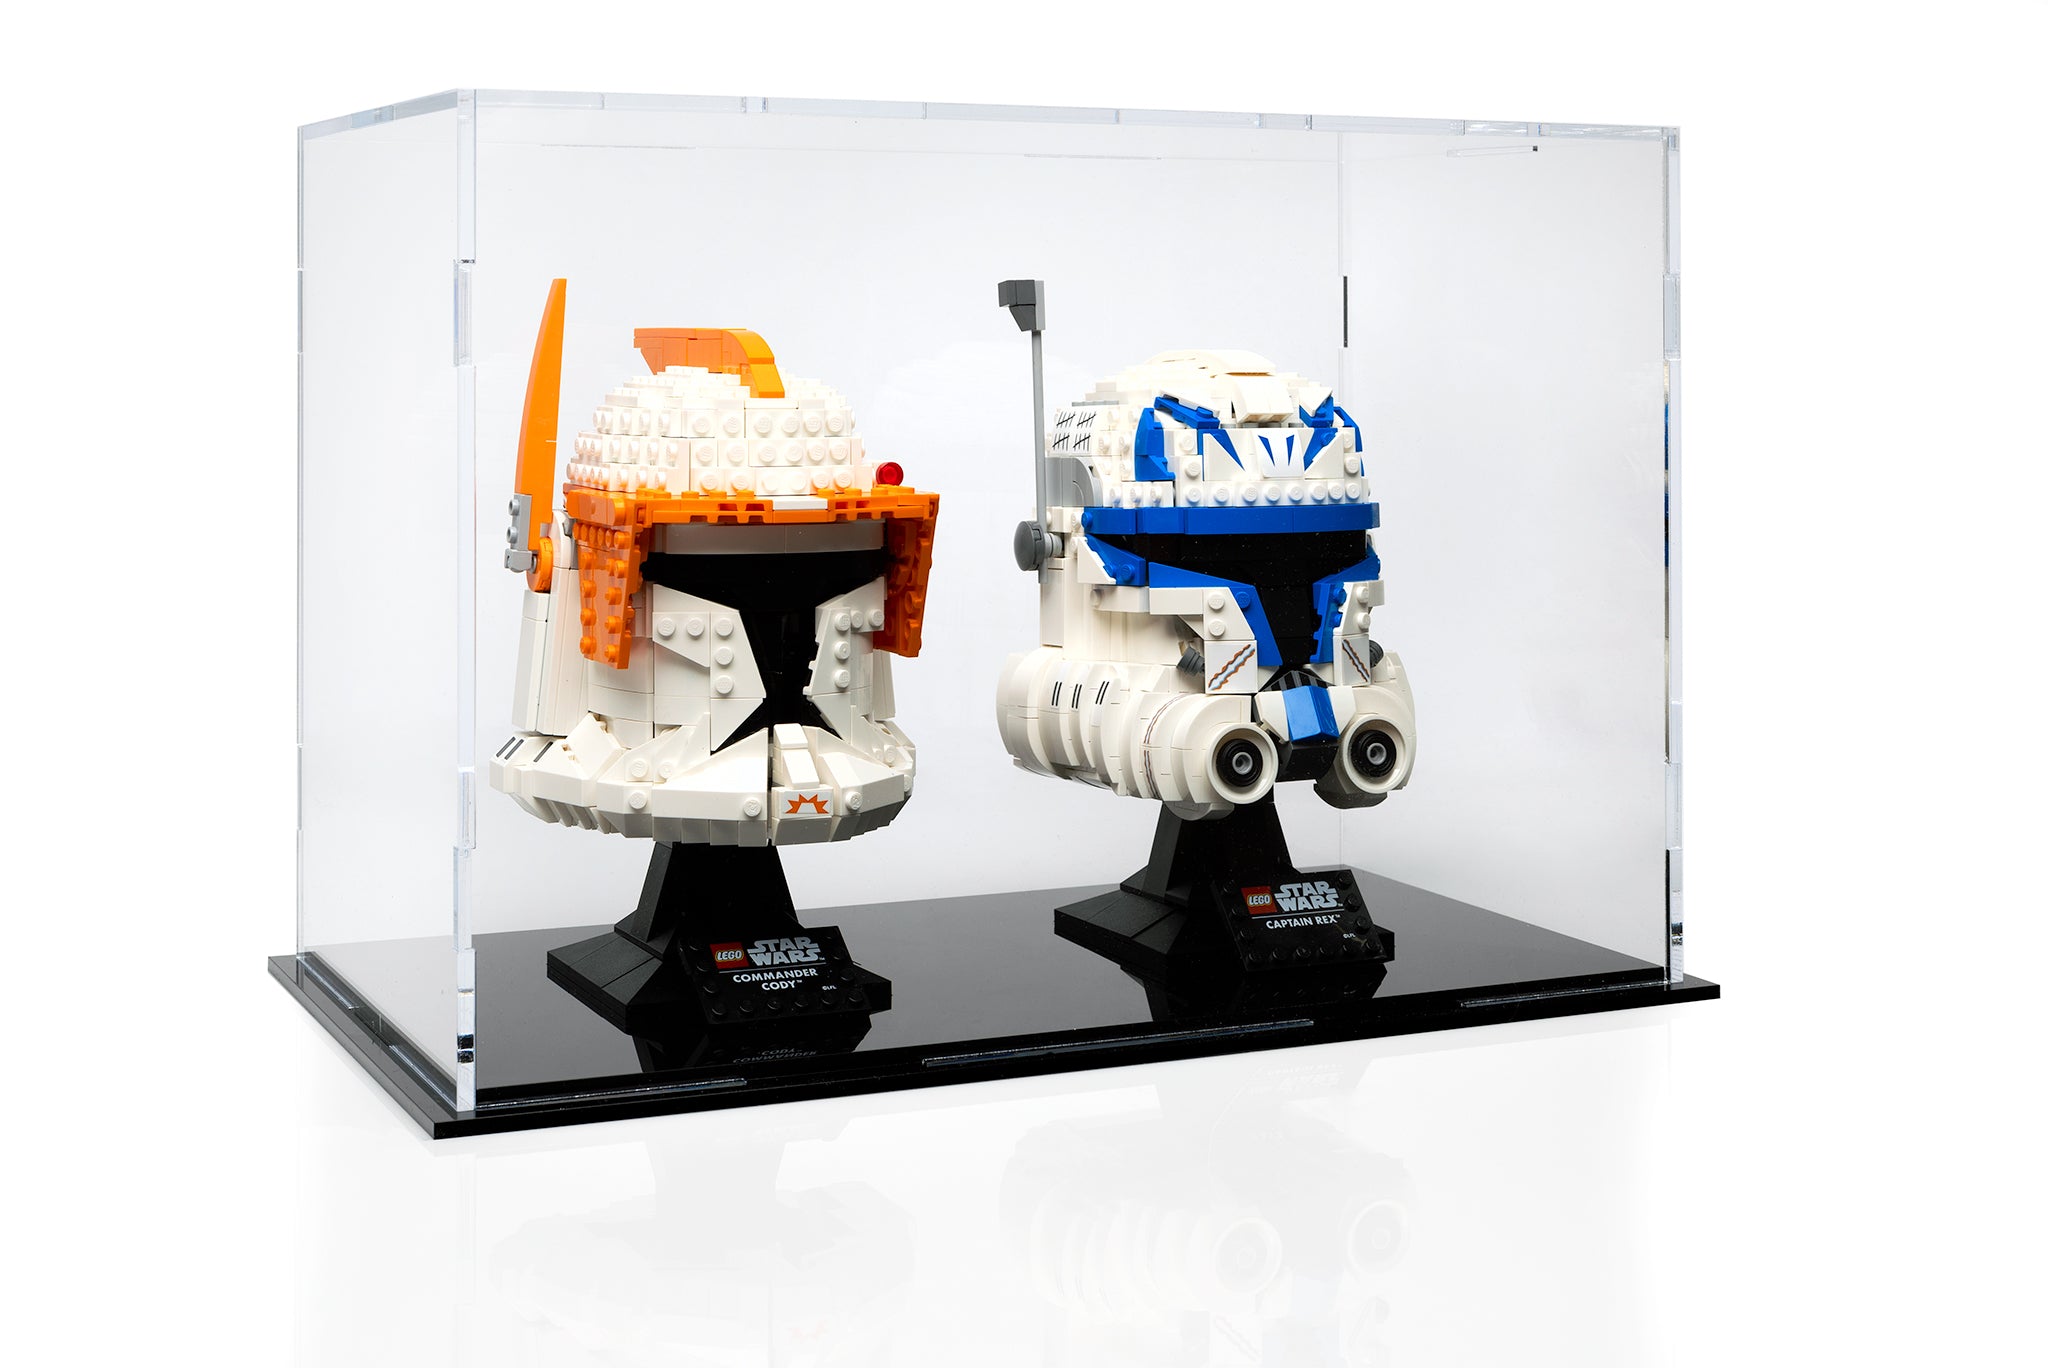 LEGO® Star Wars Helmet Display case - Commander Cody and Captain Rex - 75349, 75350